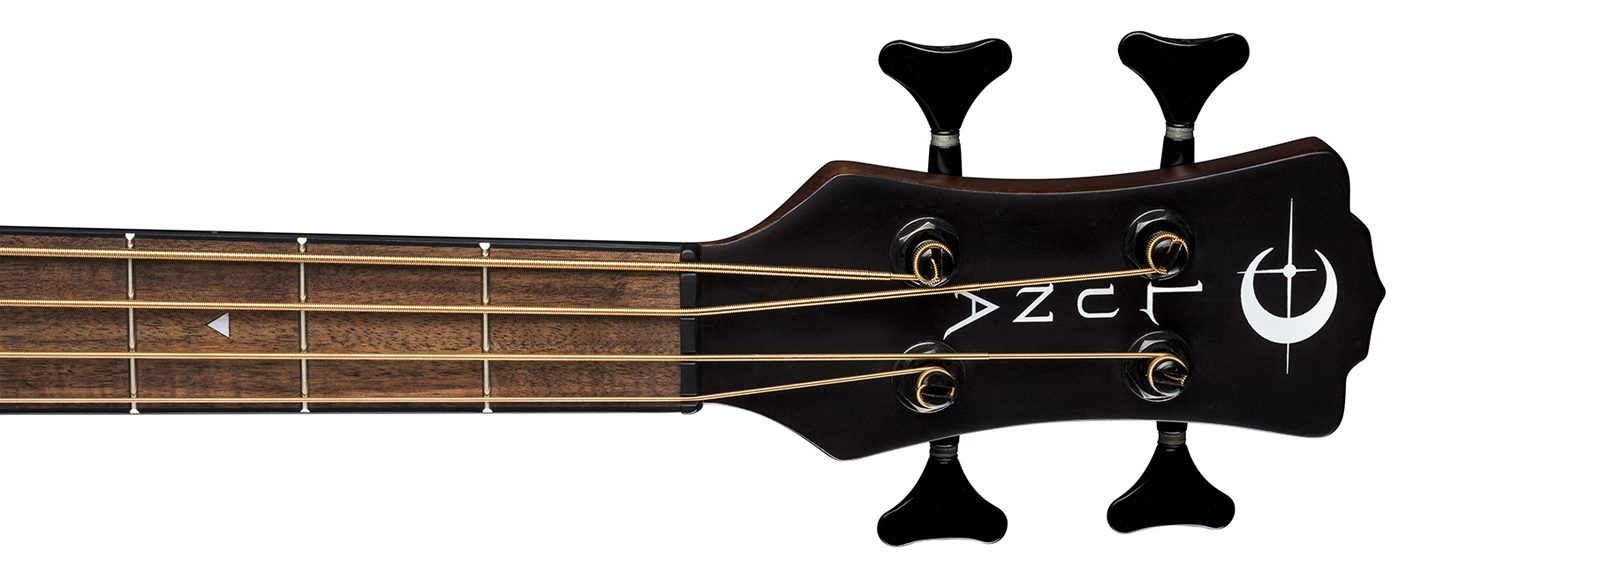 Luna Guitars product Image